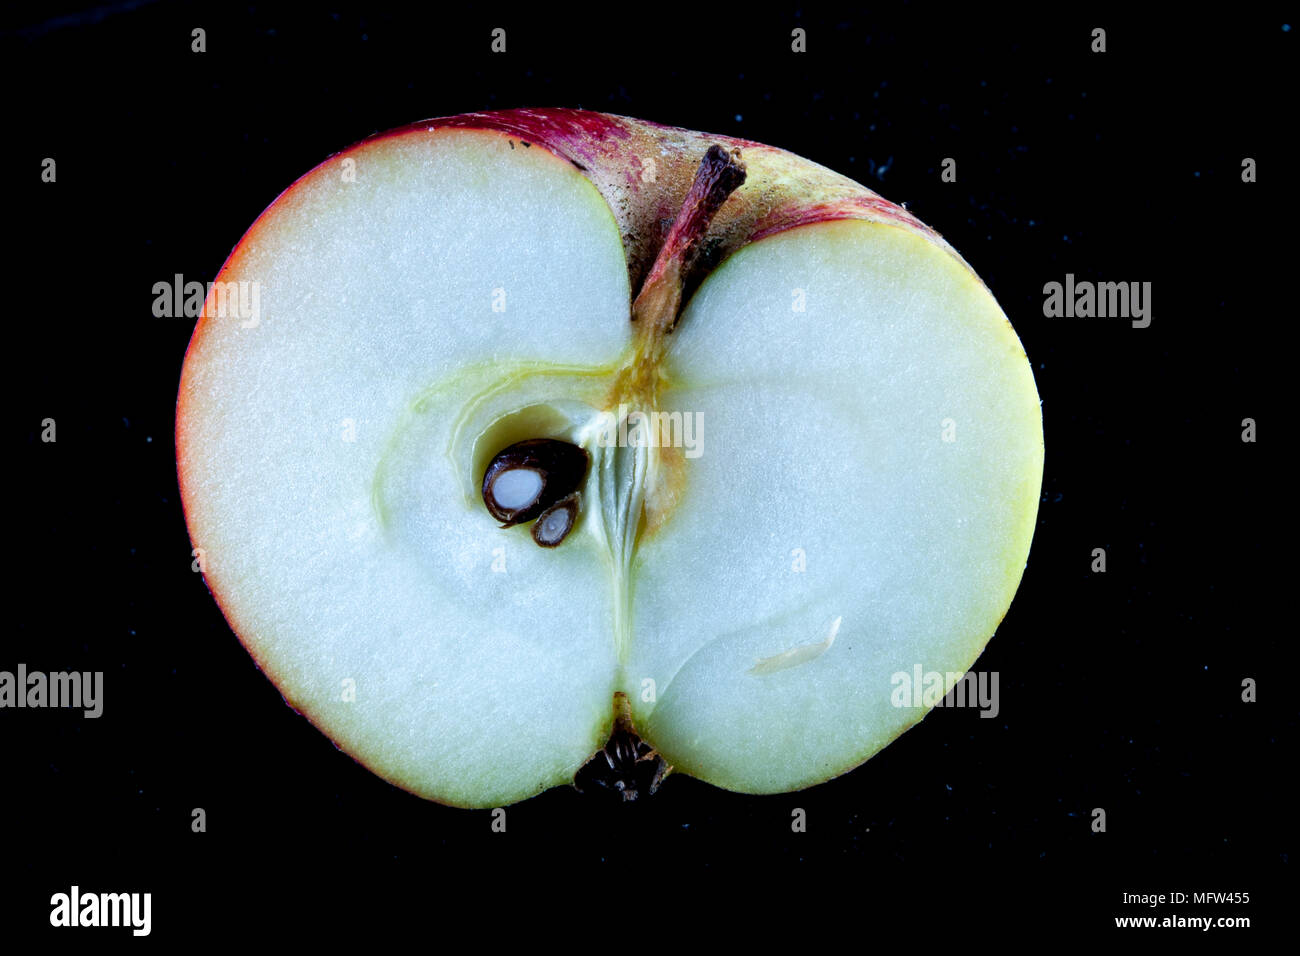 Old German Apple Cultivar 'Rote Sternrenette' Stock Photo